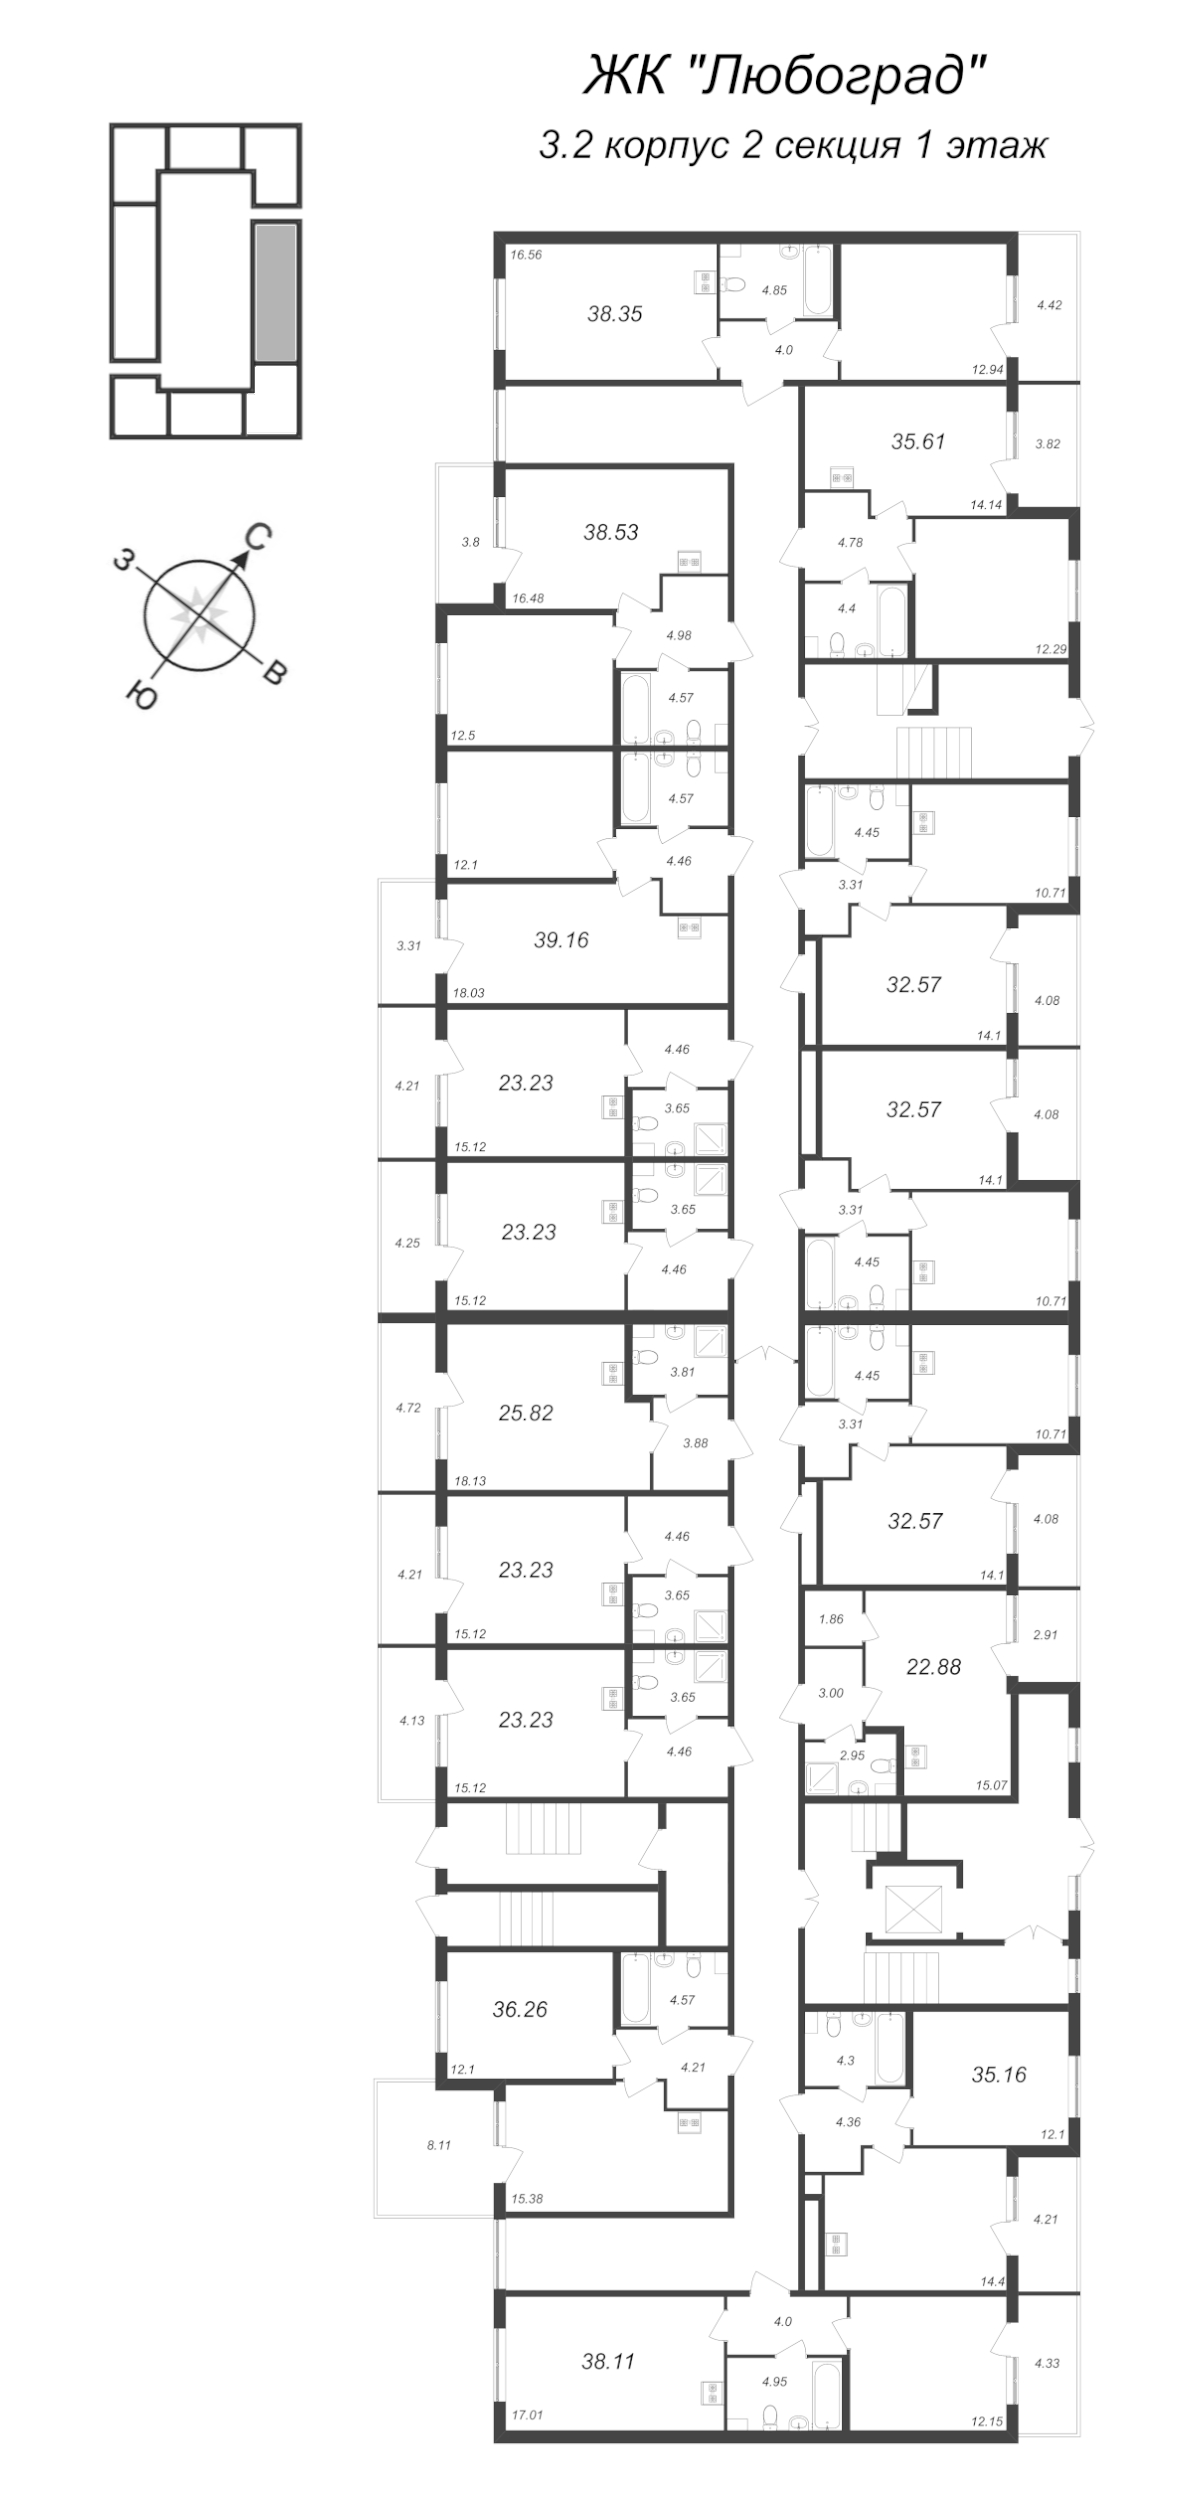 2-комнатная (Евро) квартира, 36.26 м² - планировка этажа